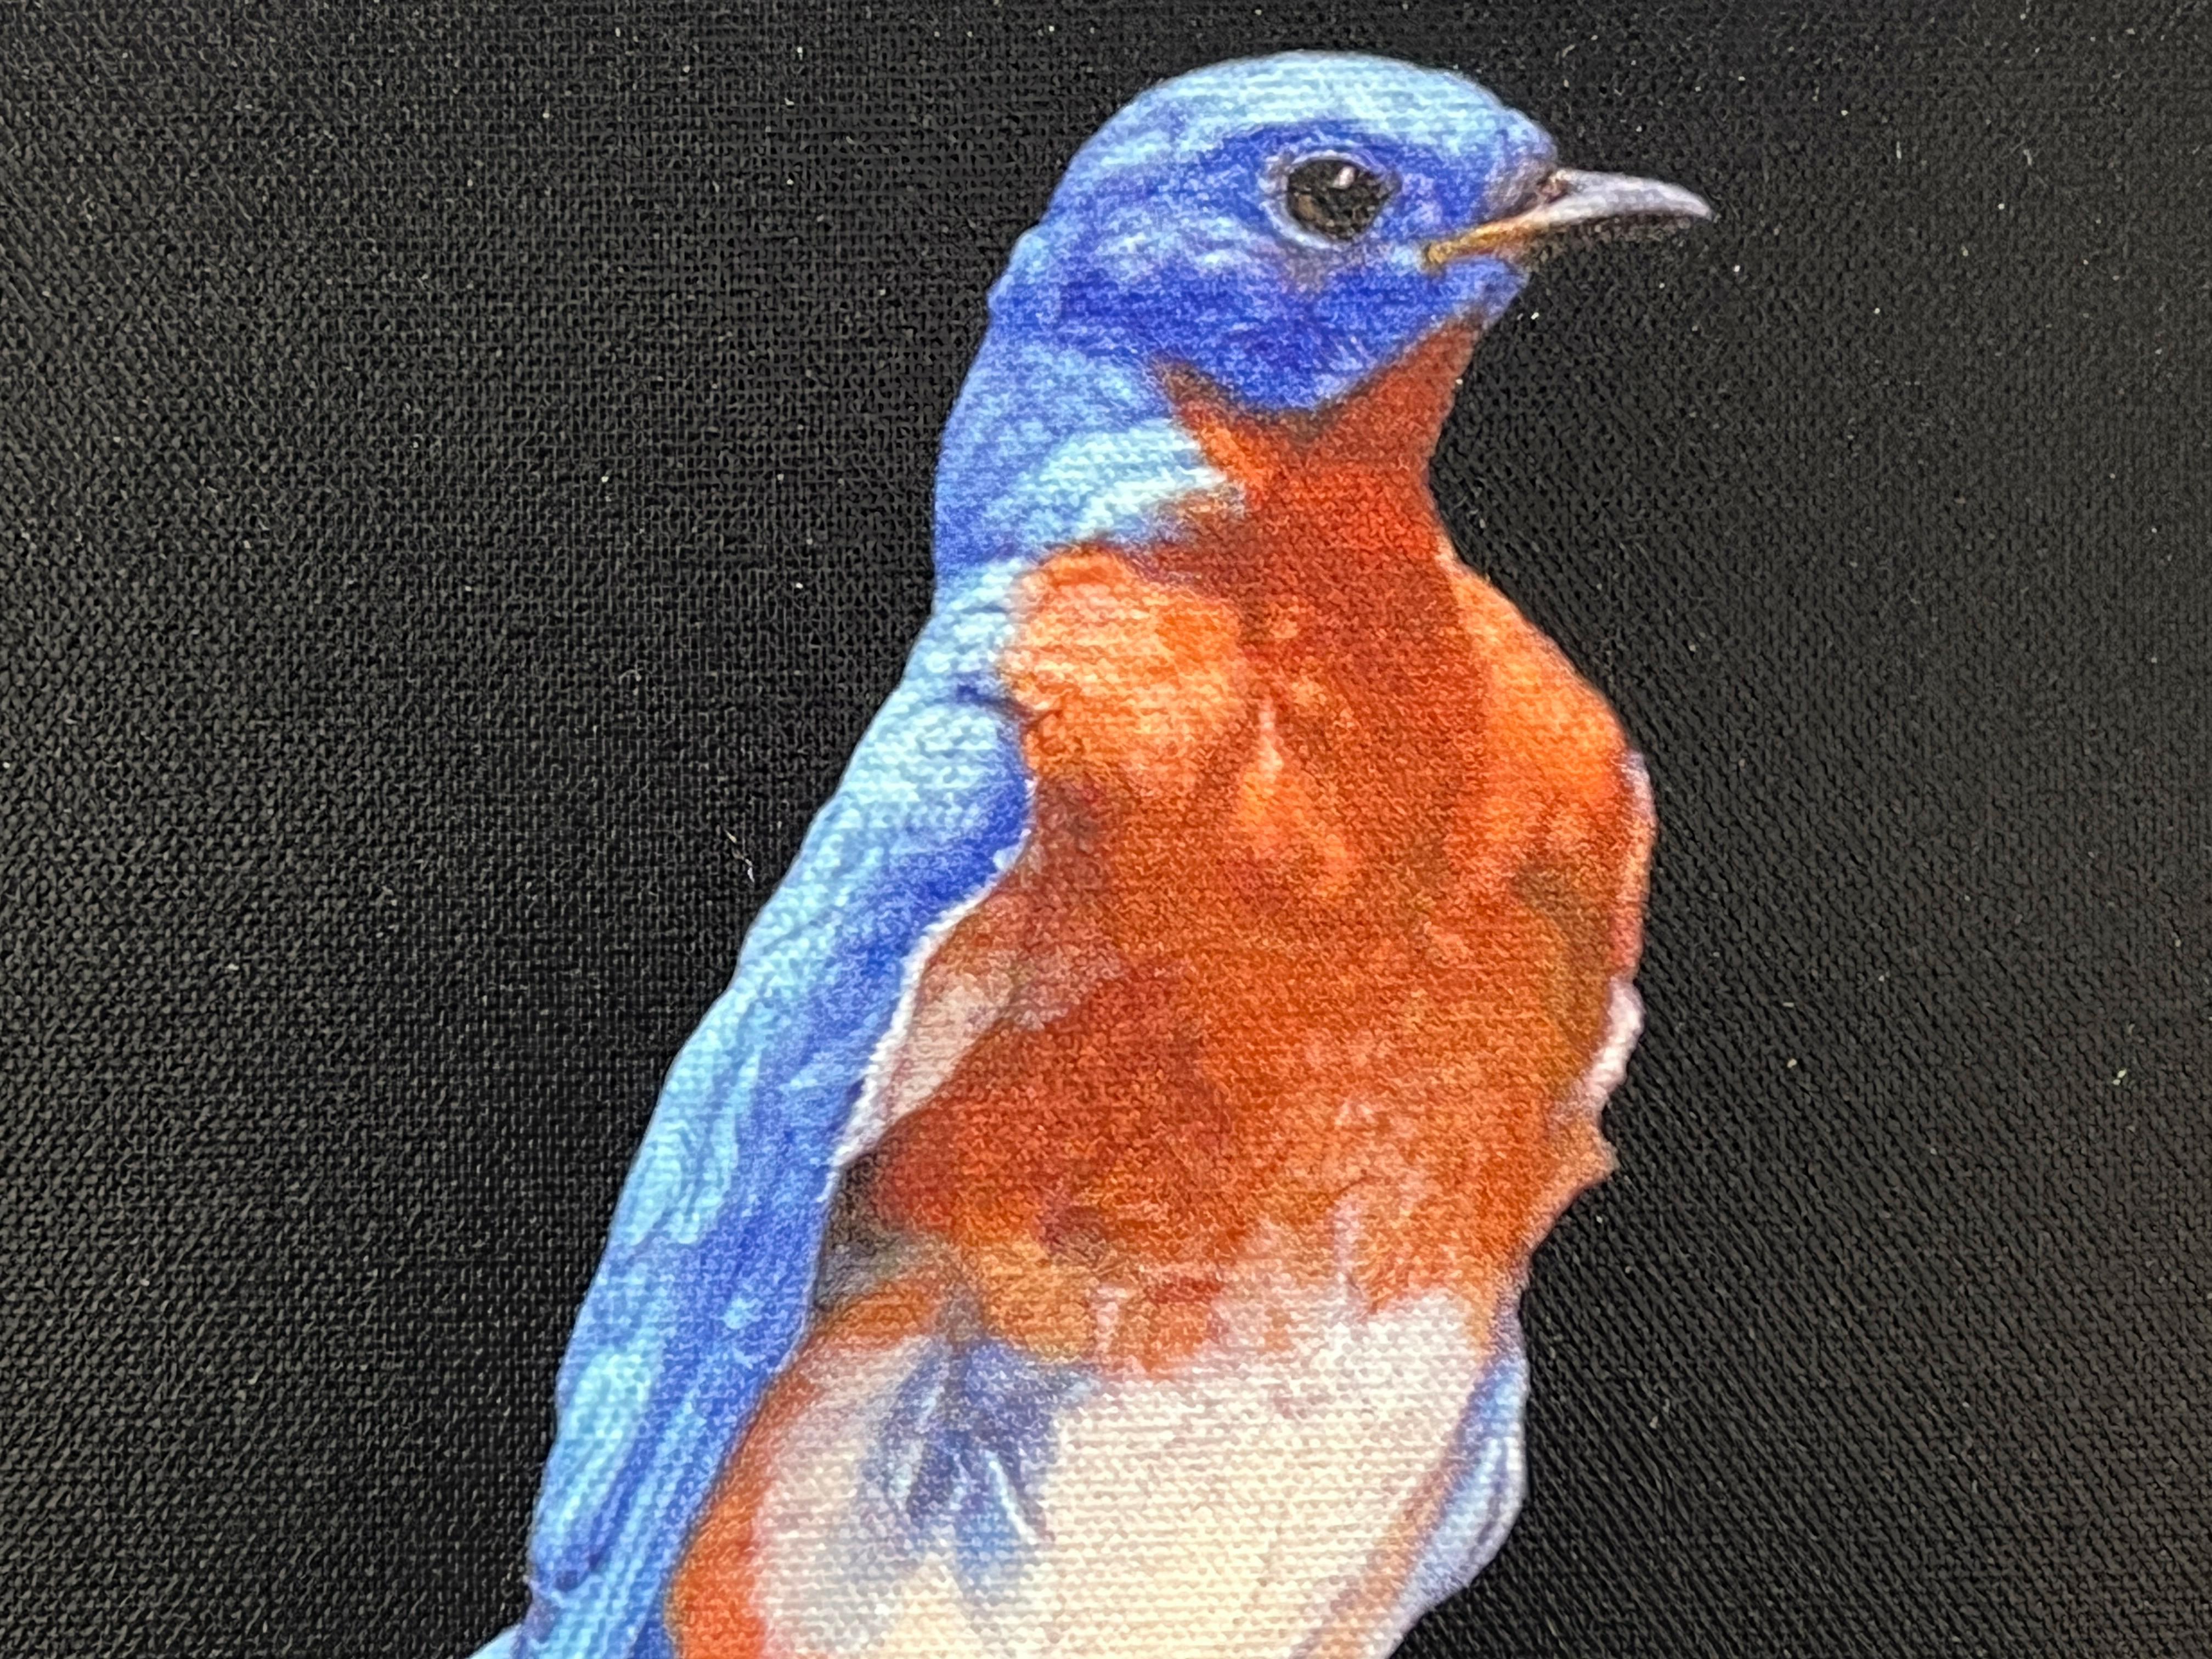 EASTERN BLUE BIRD - Contemporain / Photorealism / animal print en vente 1